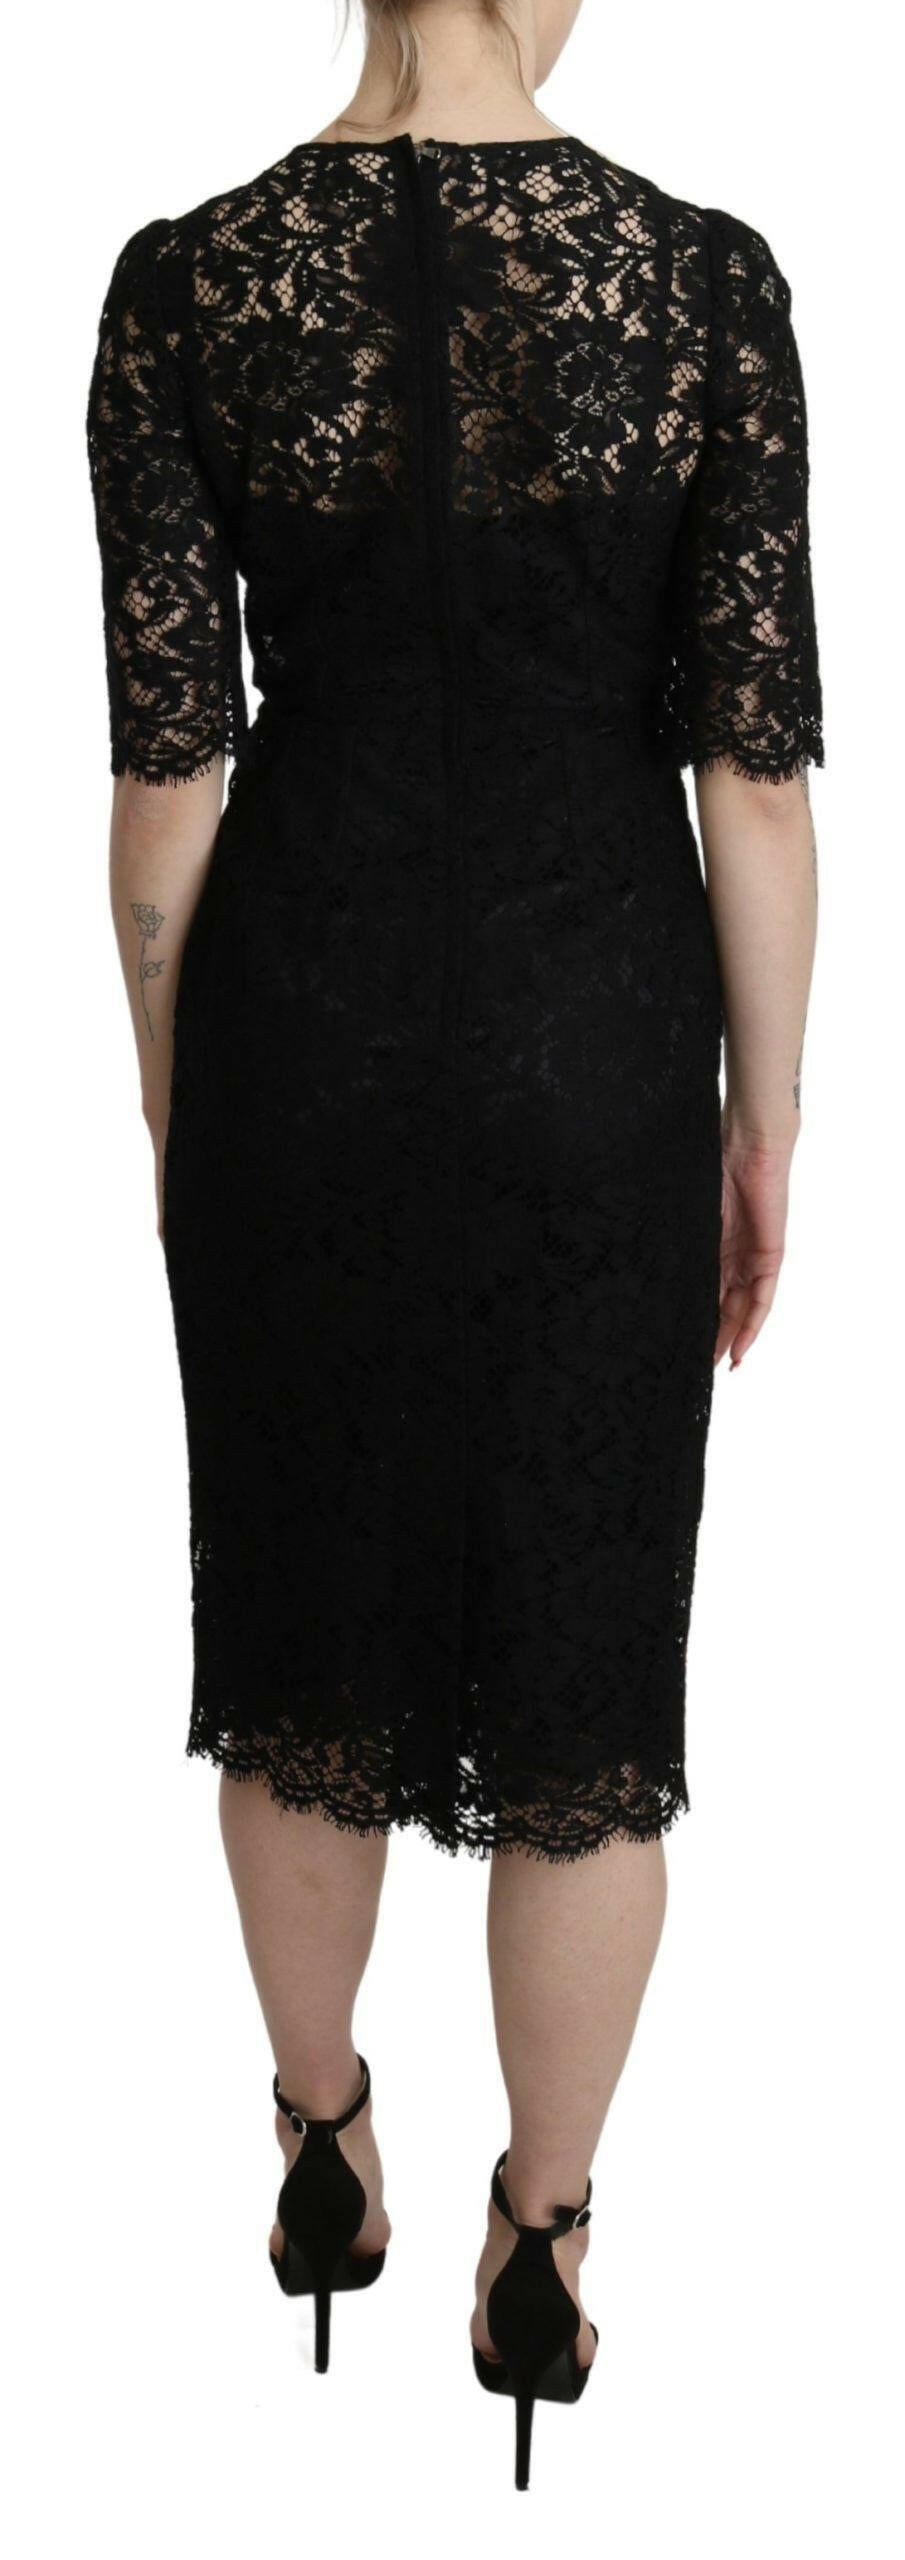 Dolce & Gabbana Black Floral Lace Sheath Knee Length Dress - GENUINE AUTHENTIC BRAND LLC  